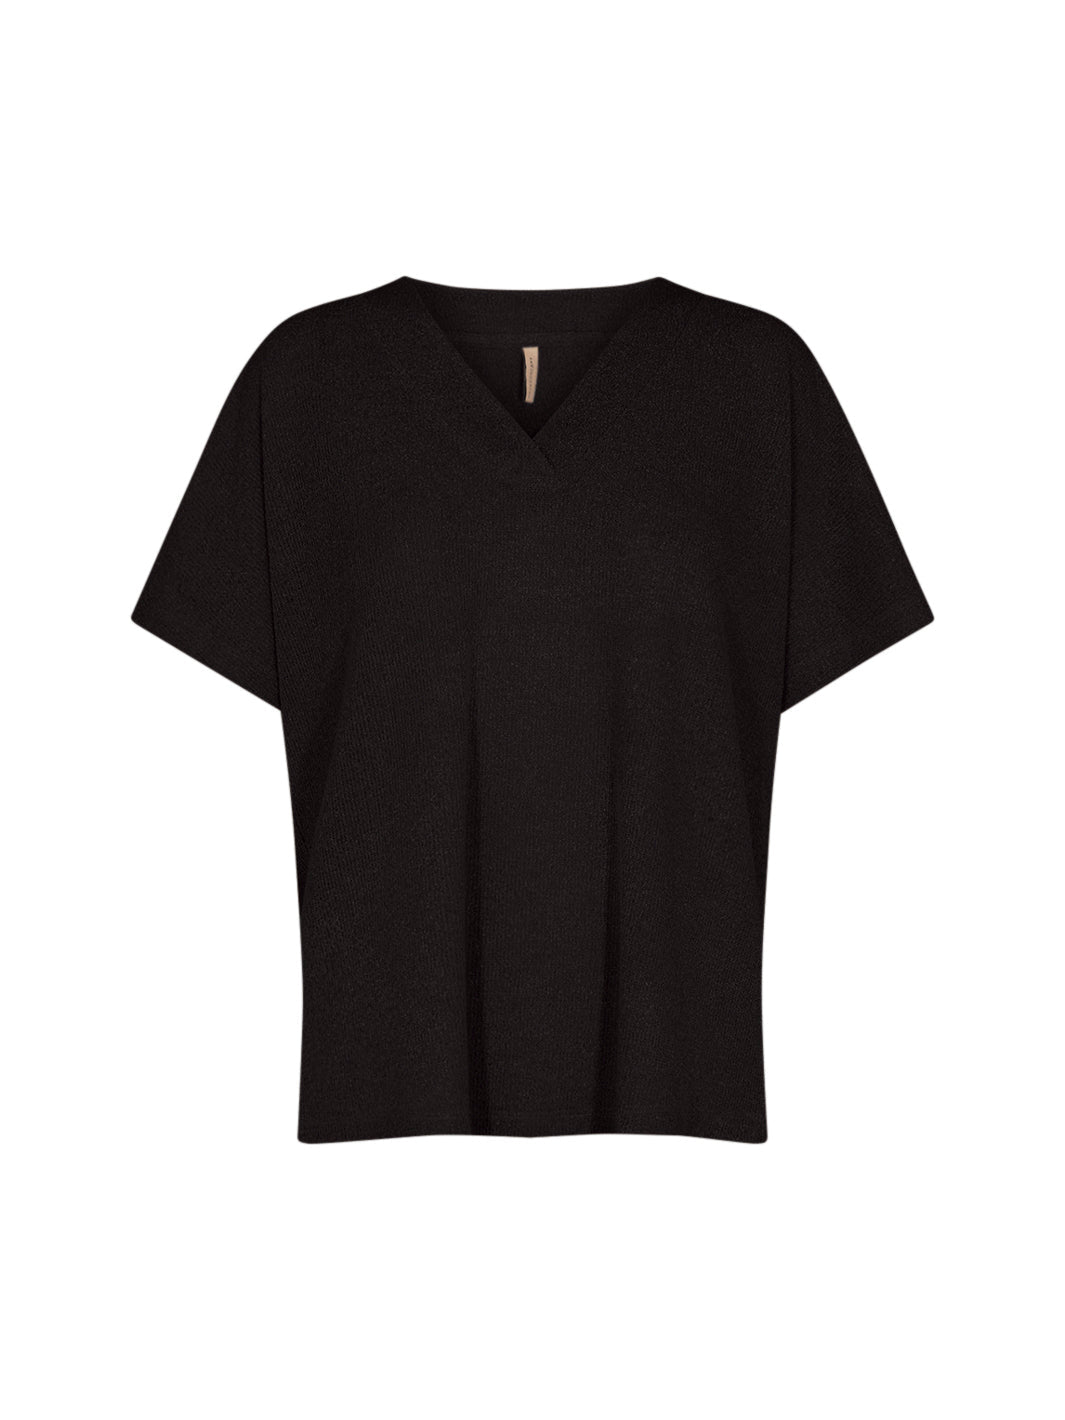 Soya Concept Delia 1 t-shirt black - Online-Mode